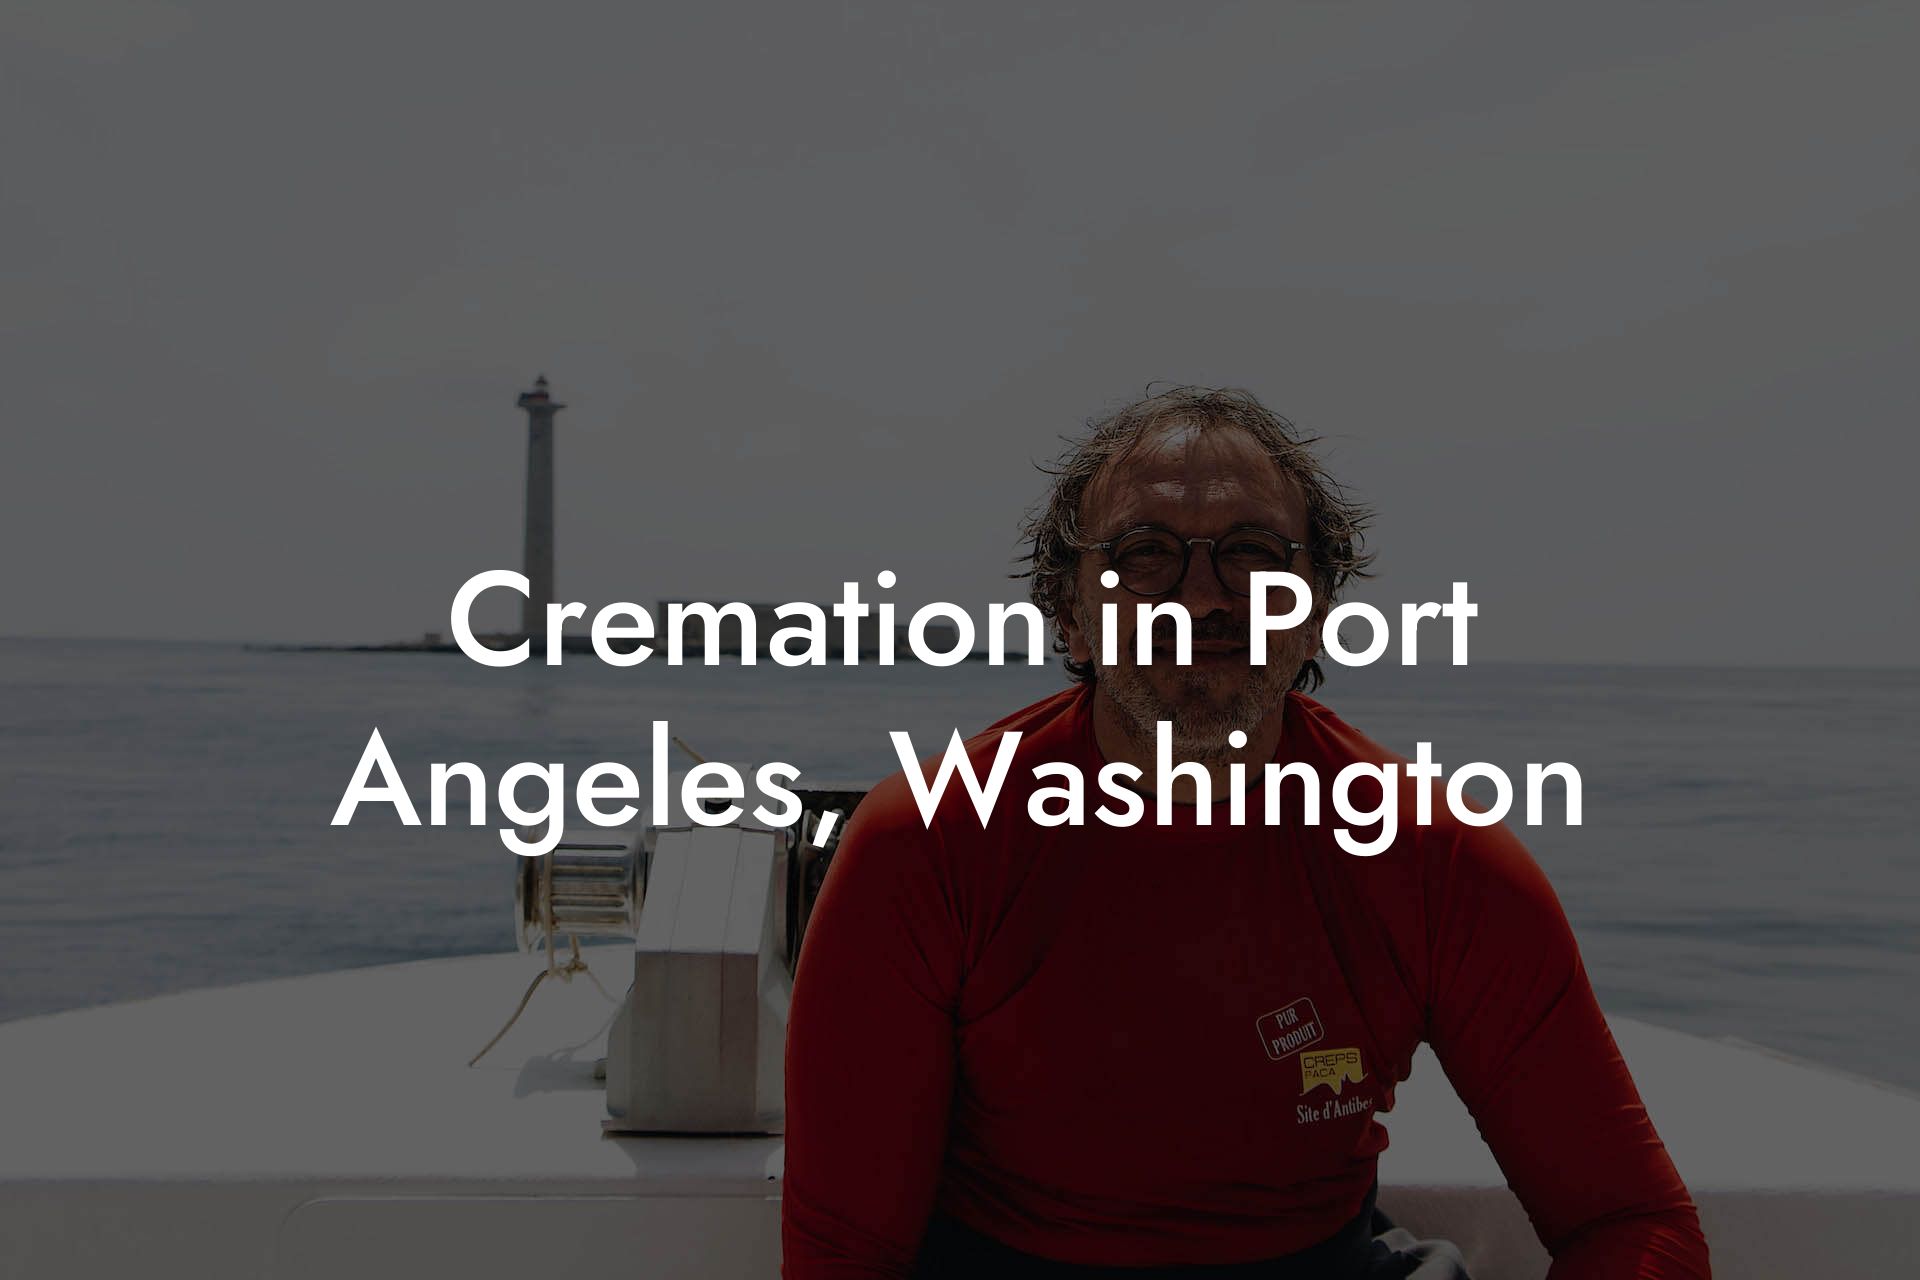 Cremation in Port Angeles, Washington